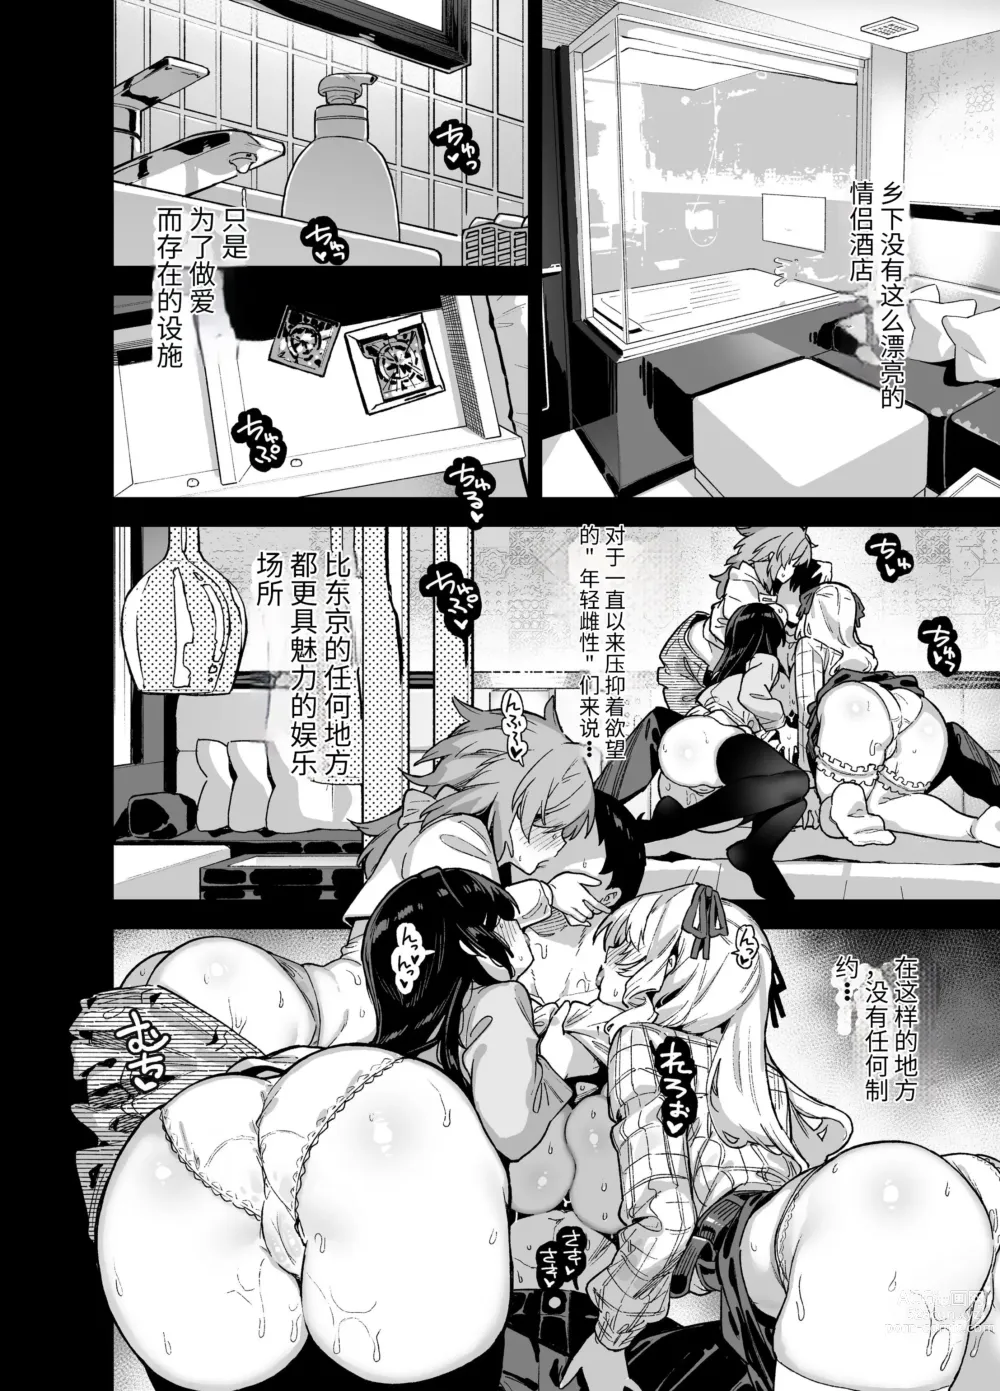 Page 15 of doujinshi 田舎にはこれくらいしか娯楽がない 4